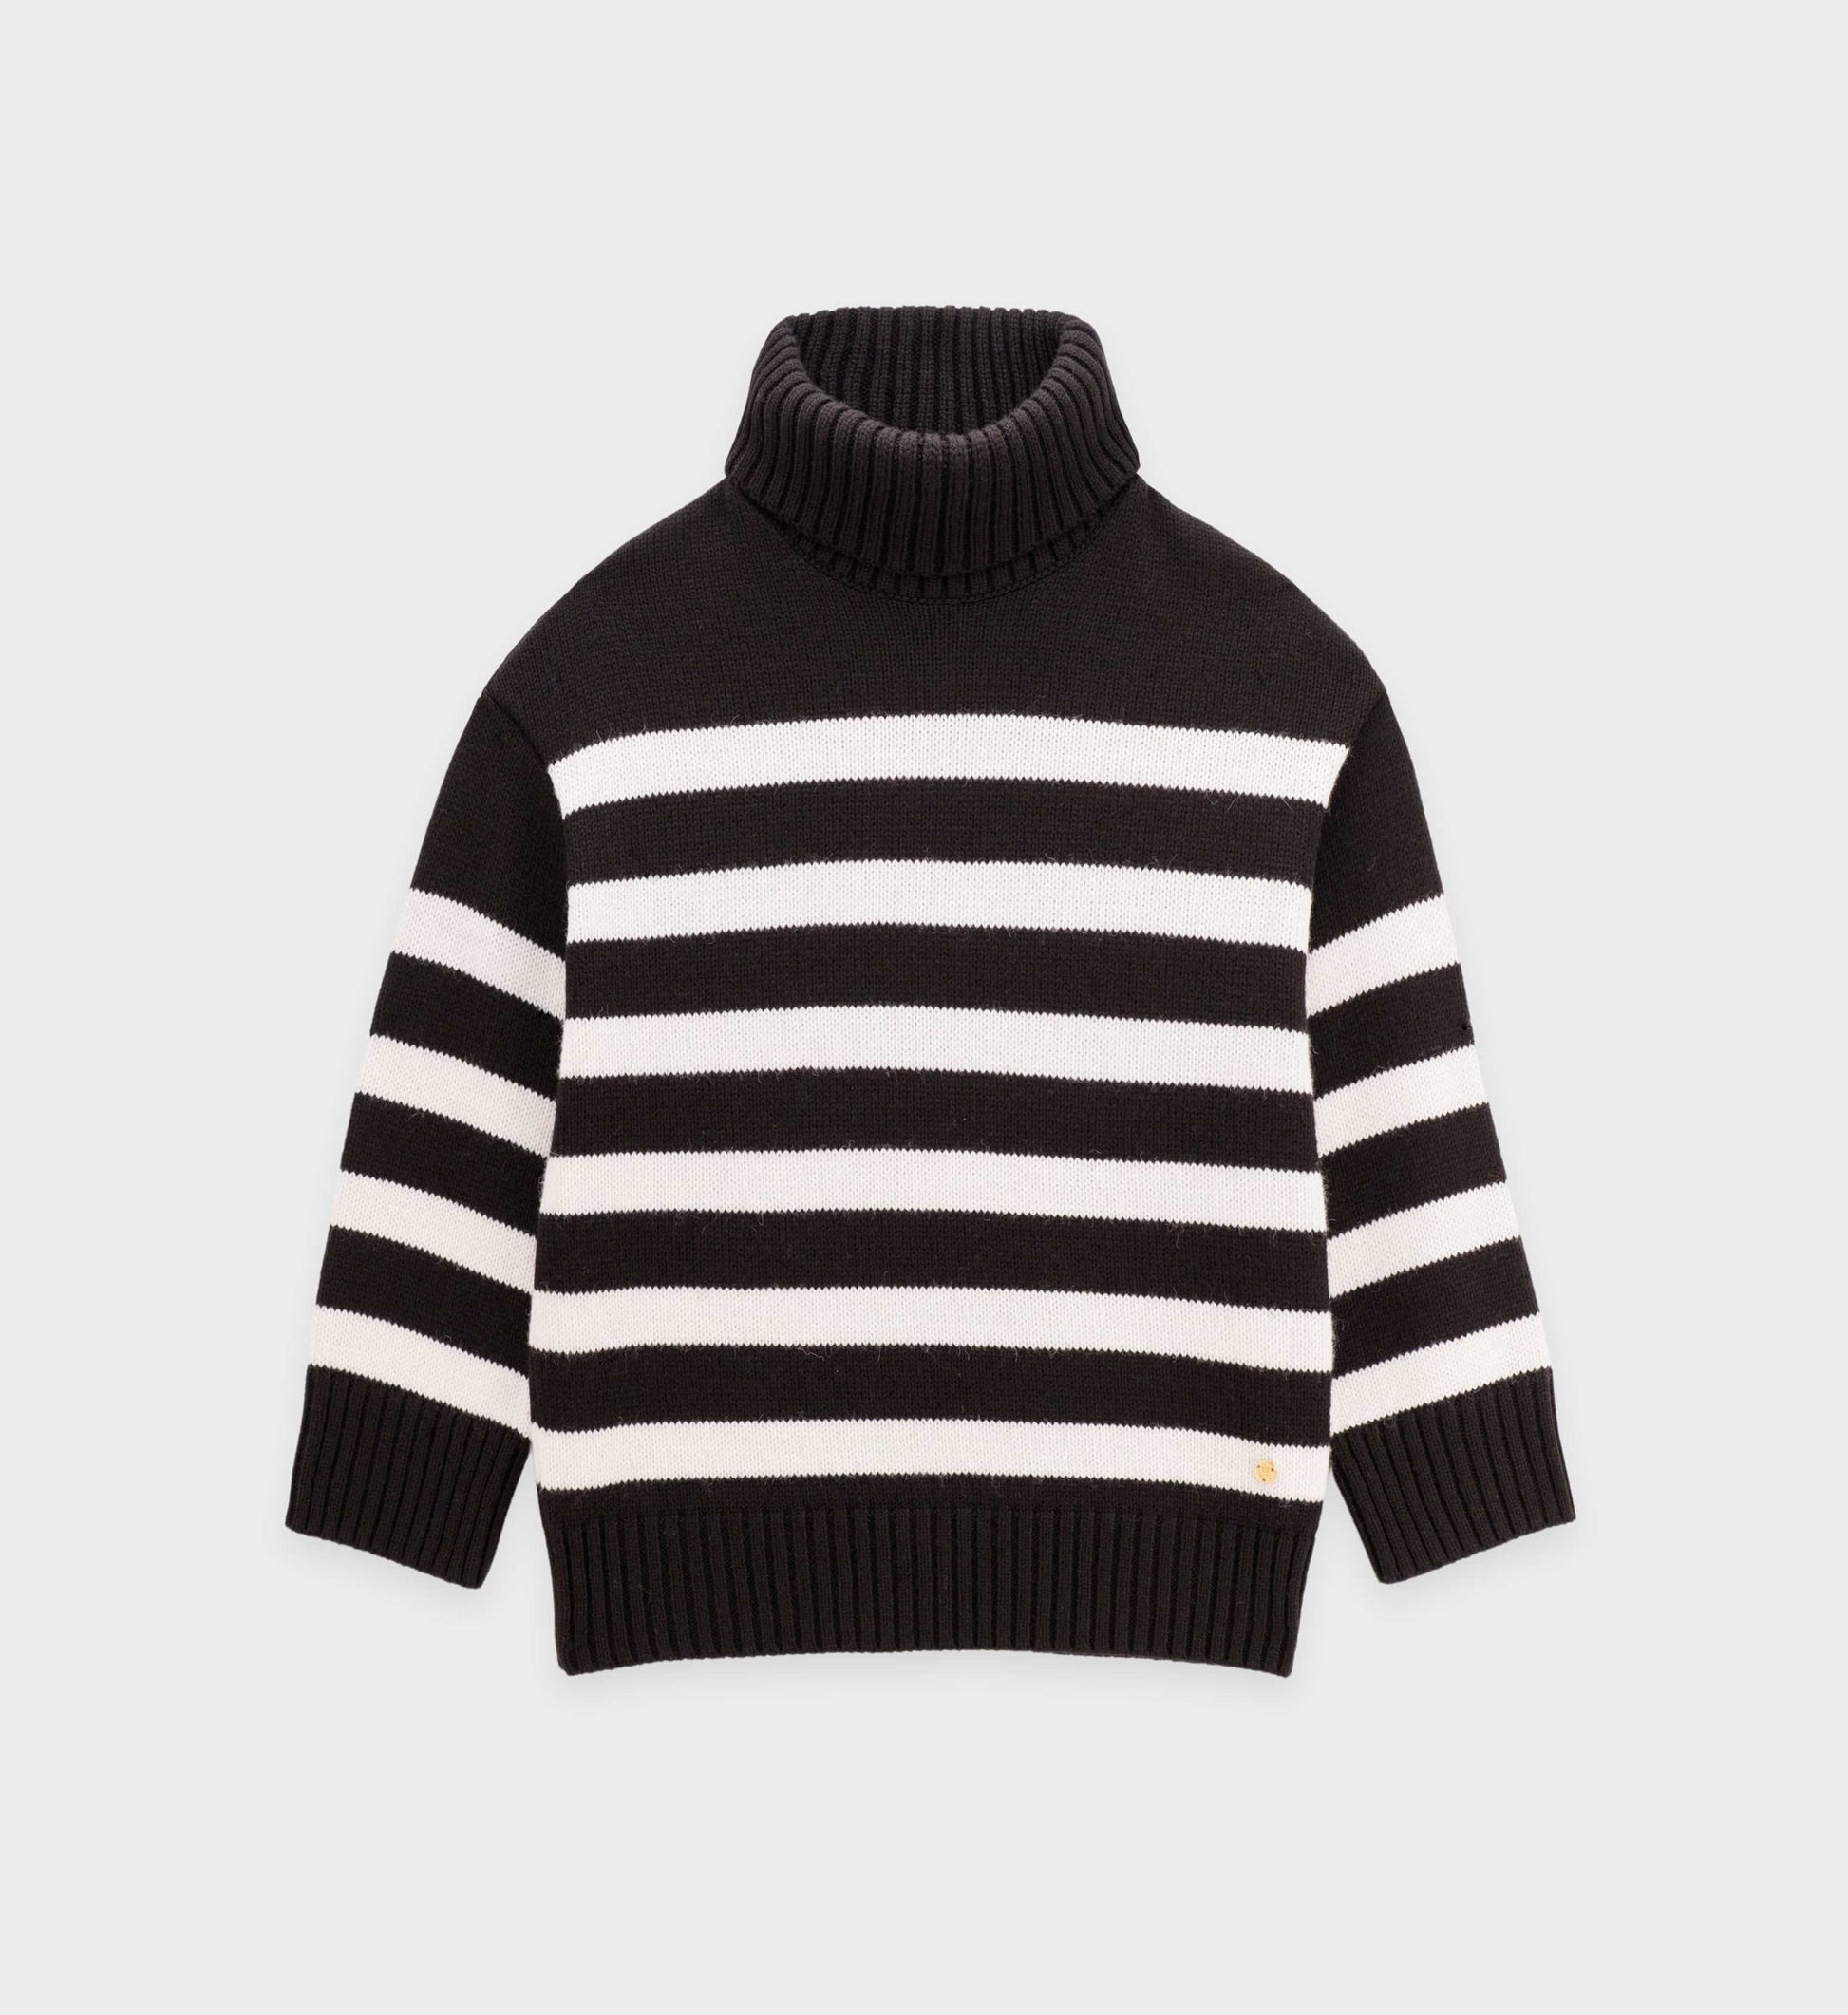 Loose striped turtleneck sweater